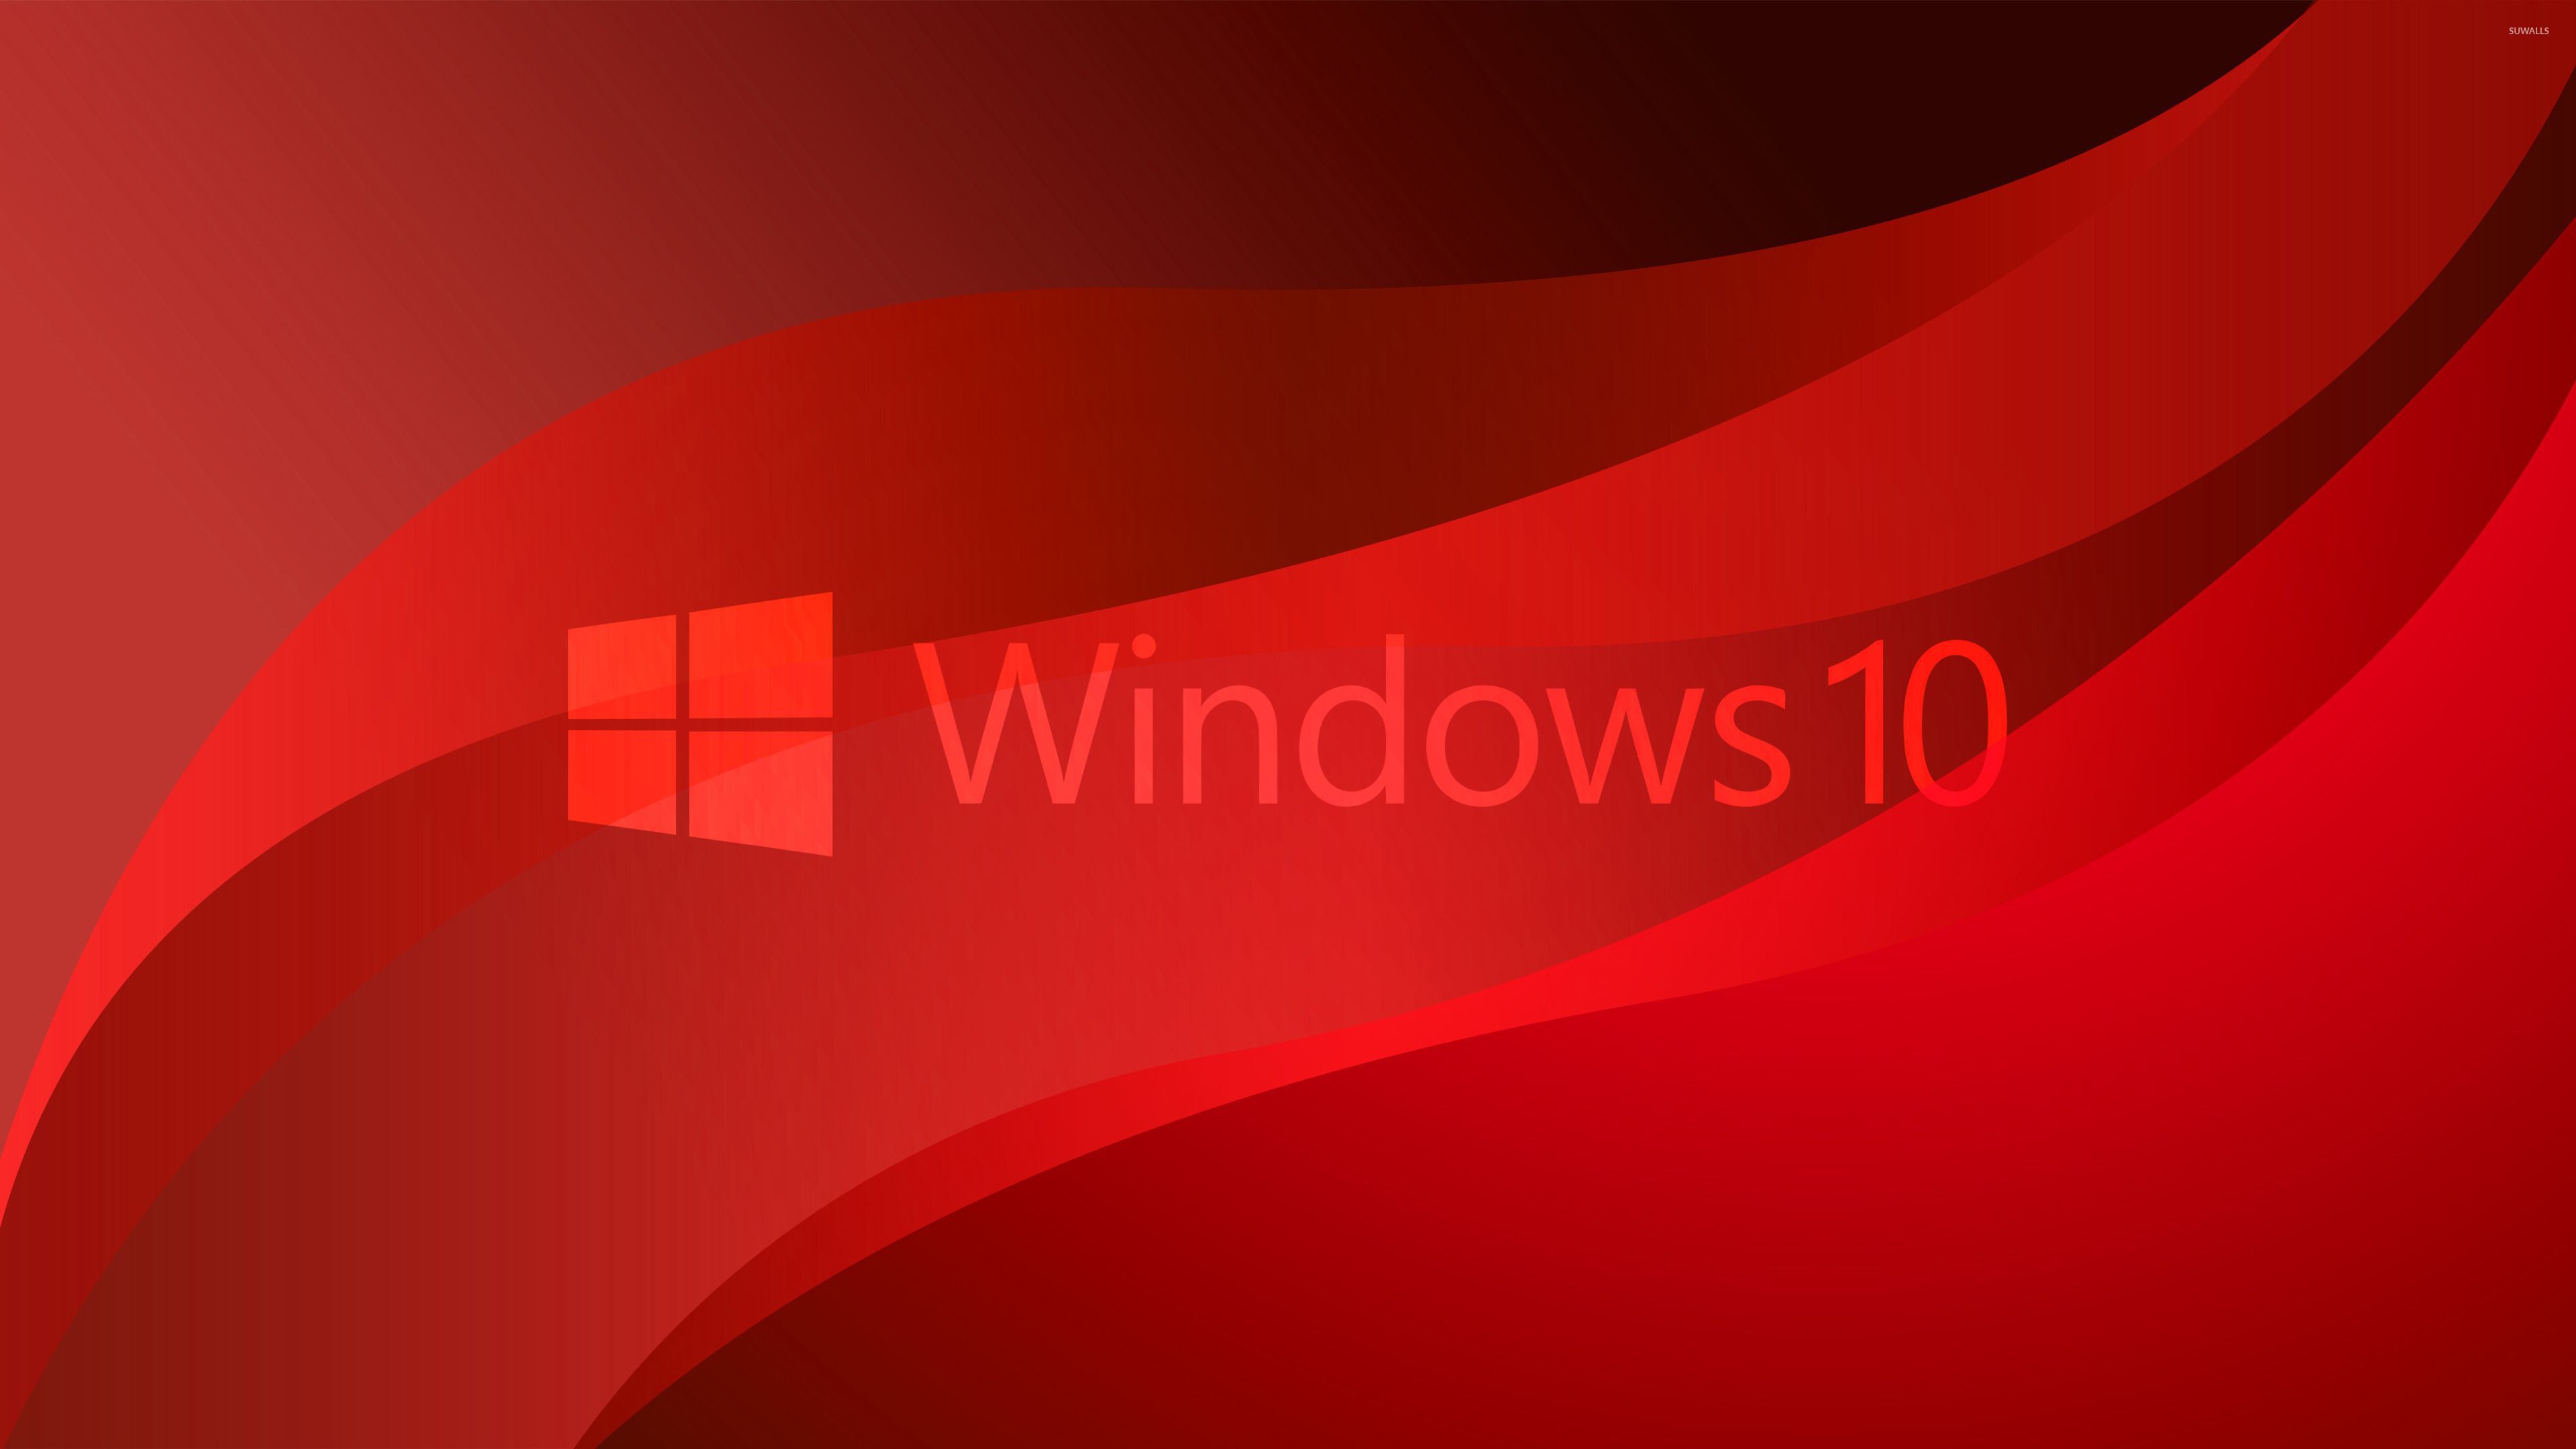  Windows 10 HD Hintergrundbild 3840x2160. Red Windows 10 4K HD Red Aesthetic Wallpaper